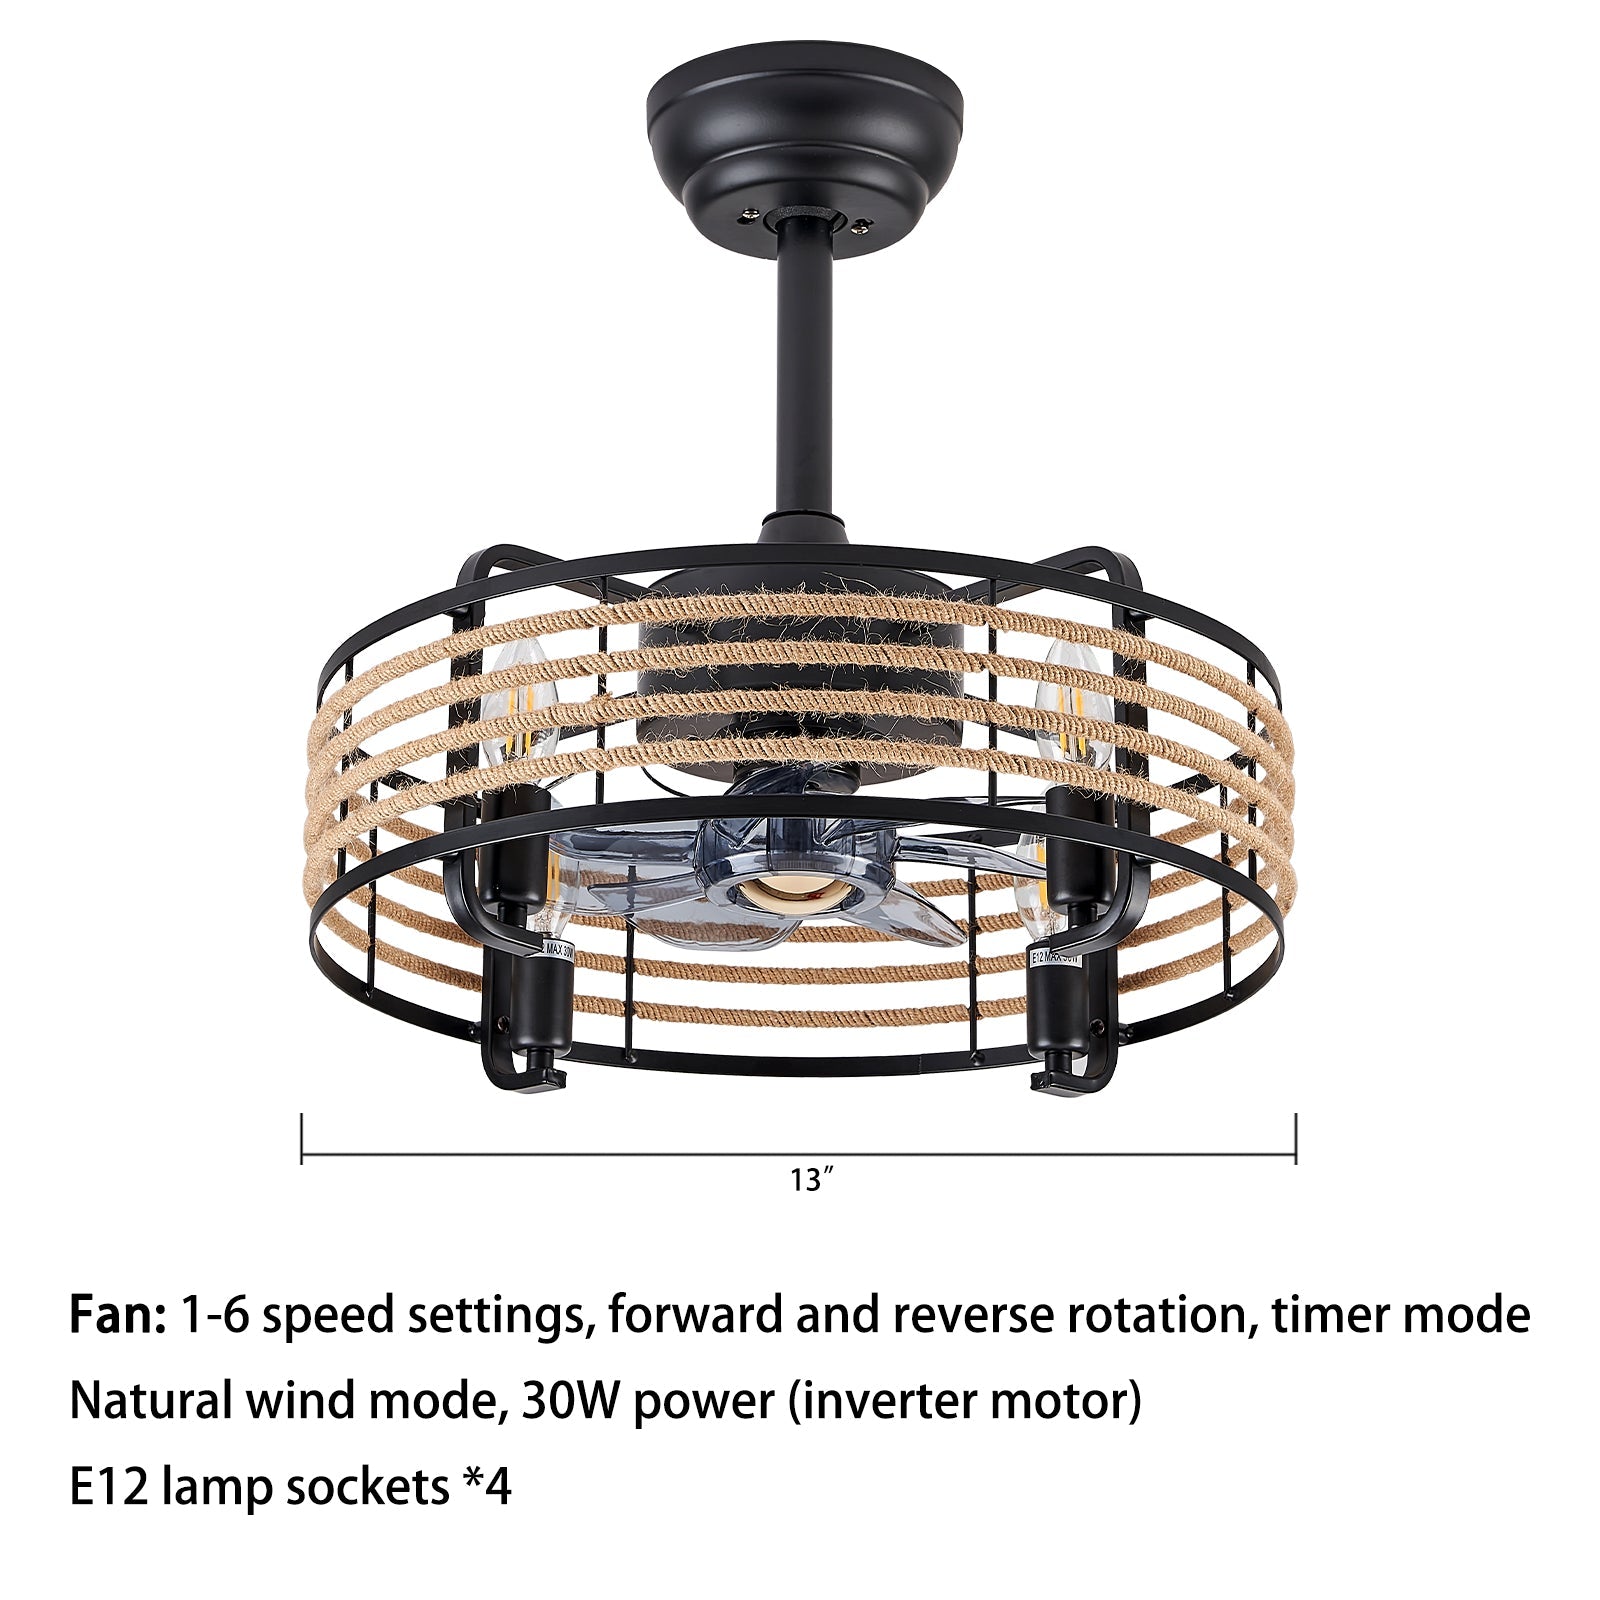 Inès 6-Speed Ceiling Fan Light: Reverse, Timer, Natural Wind, 30W, E12 x4